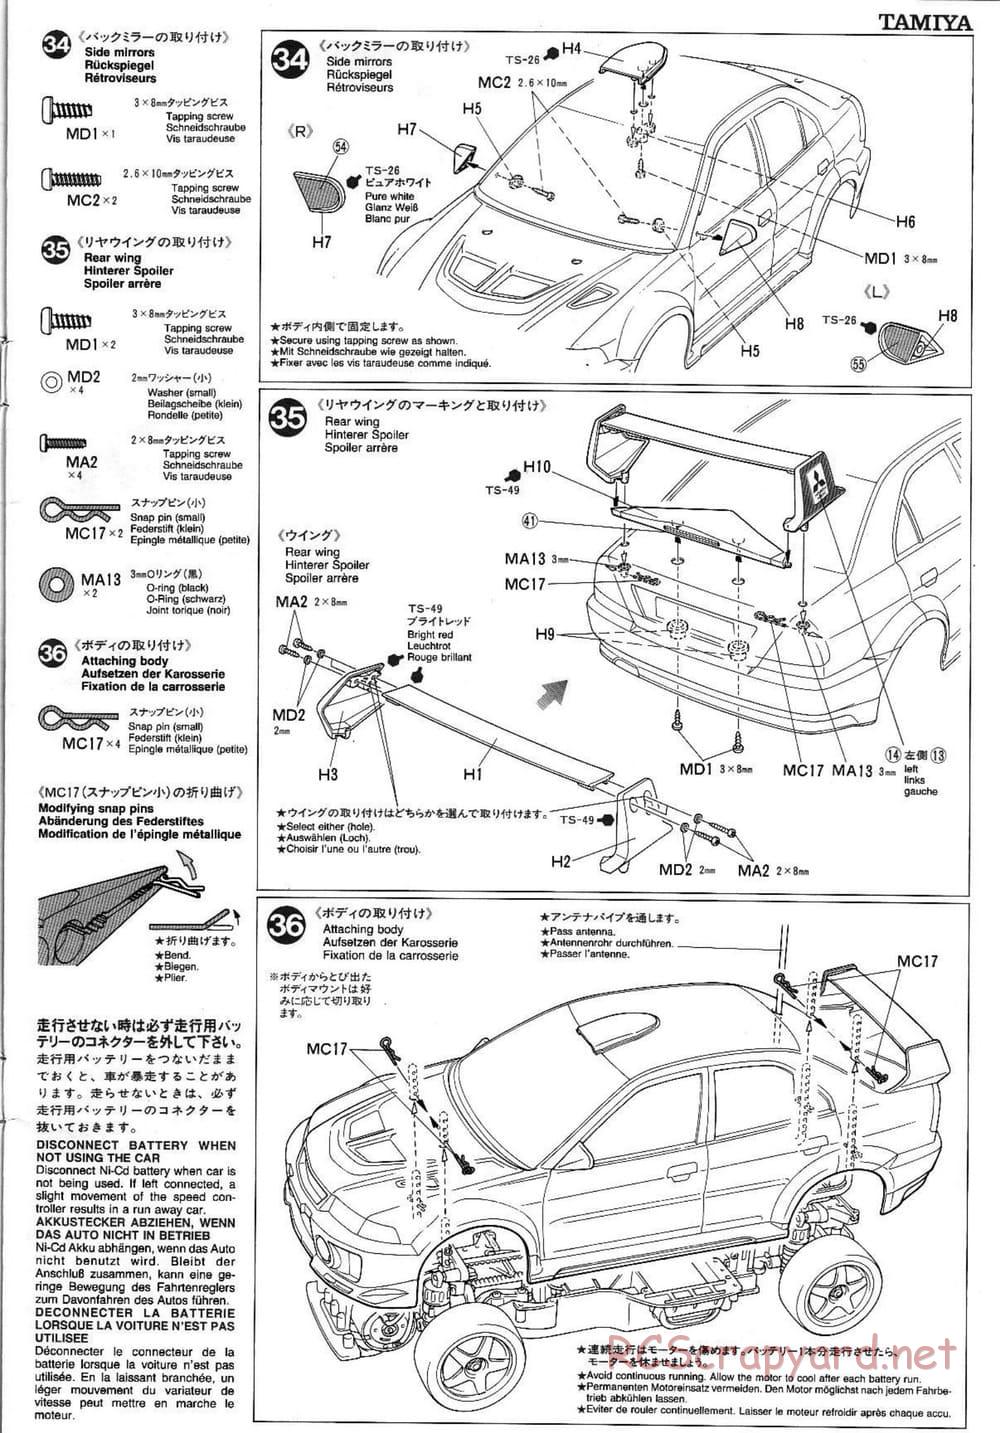 Tamiya - Mitsubishi Lancer Evolution V WRC - TA-03F Chassis - Manual - Page 19